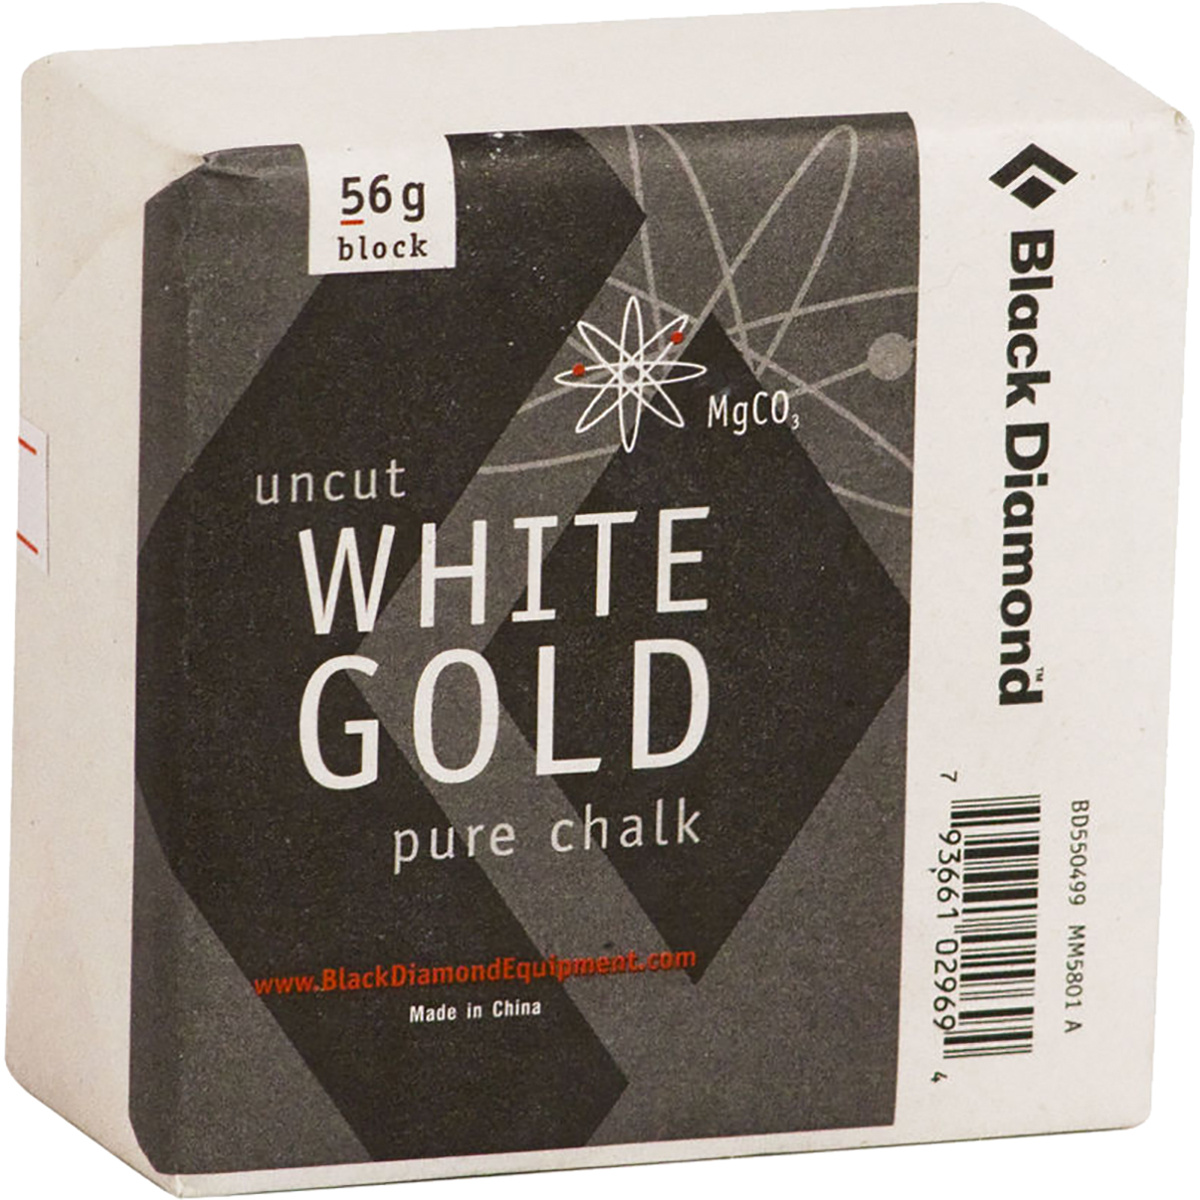 Image of Black Diamond Solid White Gold 56 g Chalkblock